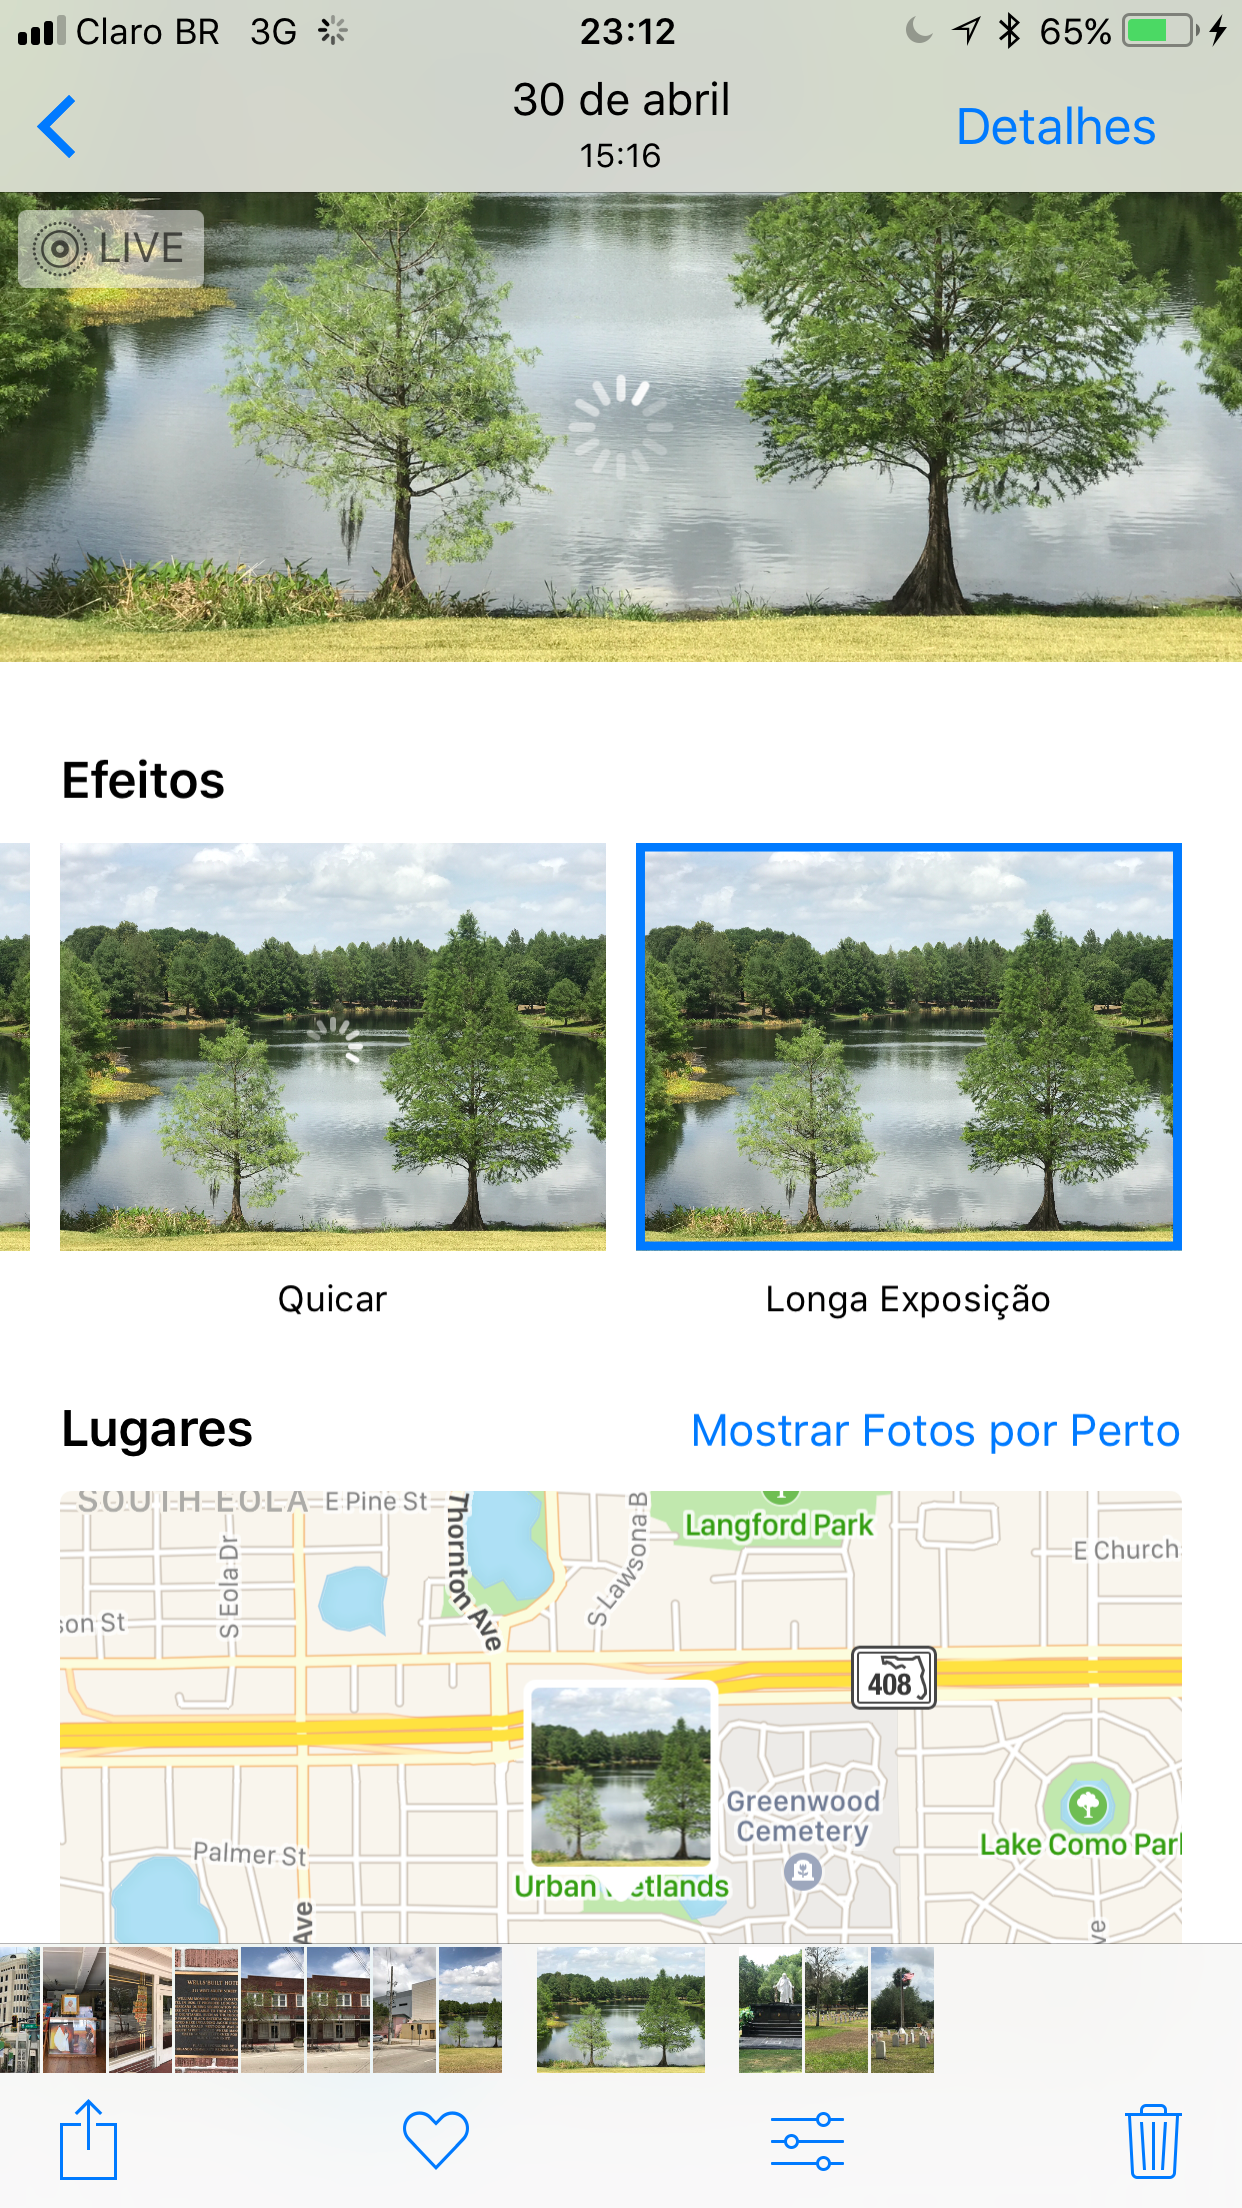 Screenshots do iOS 11 beta